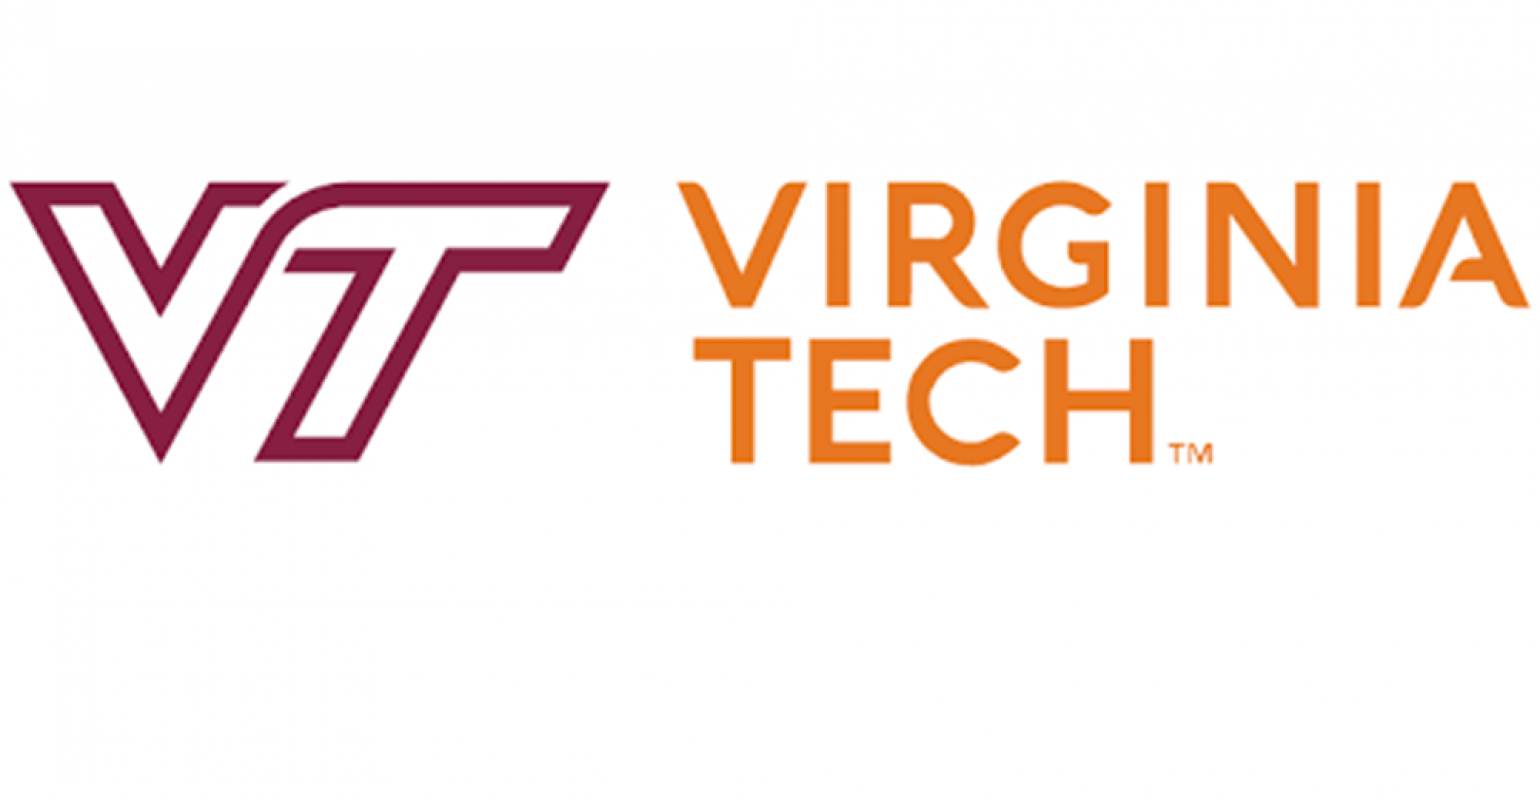 Virginia Tech.png